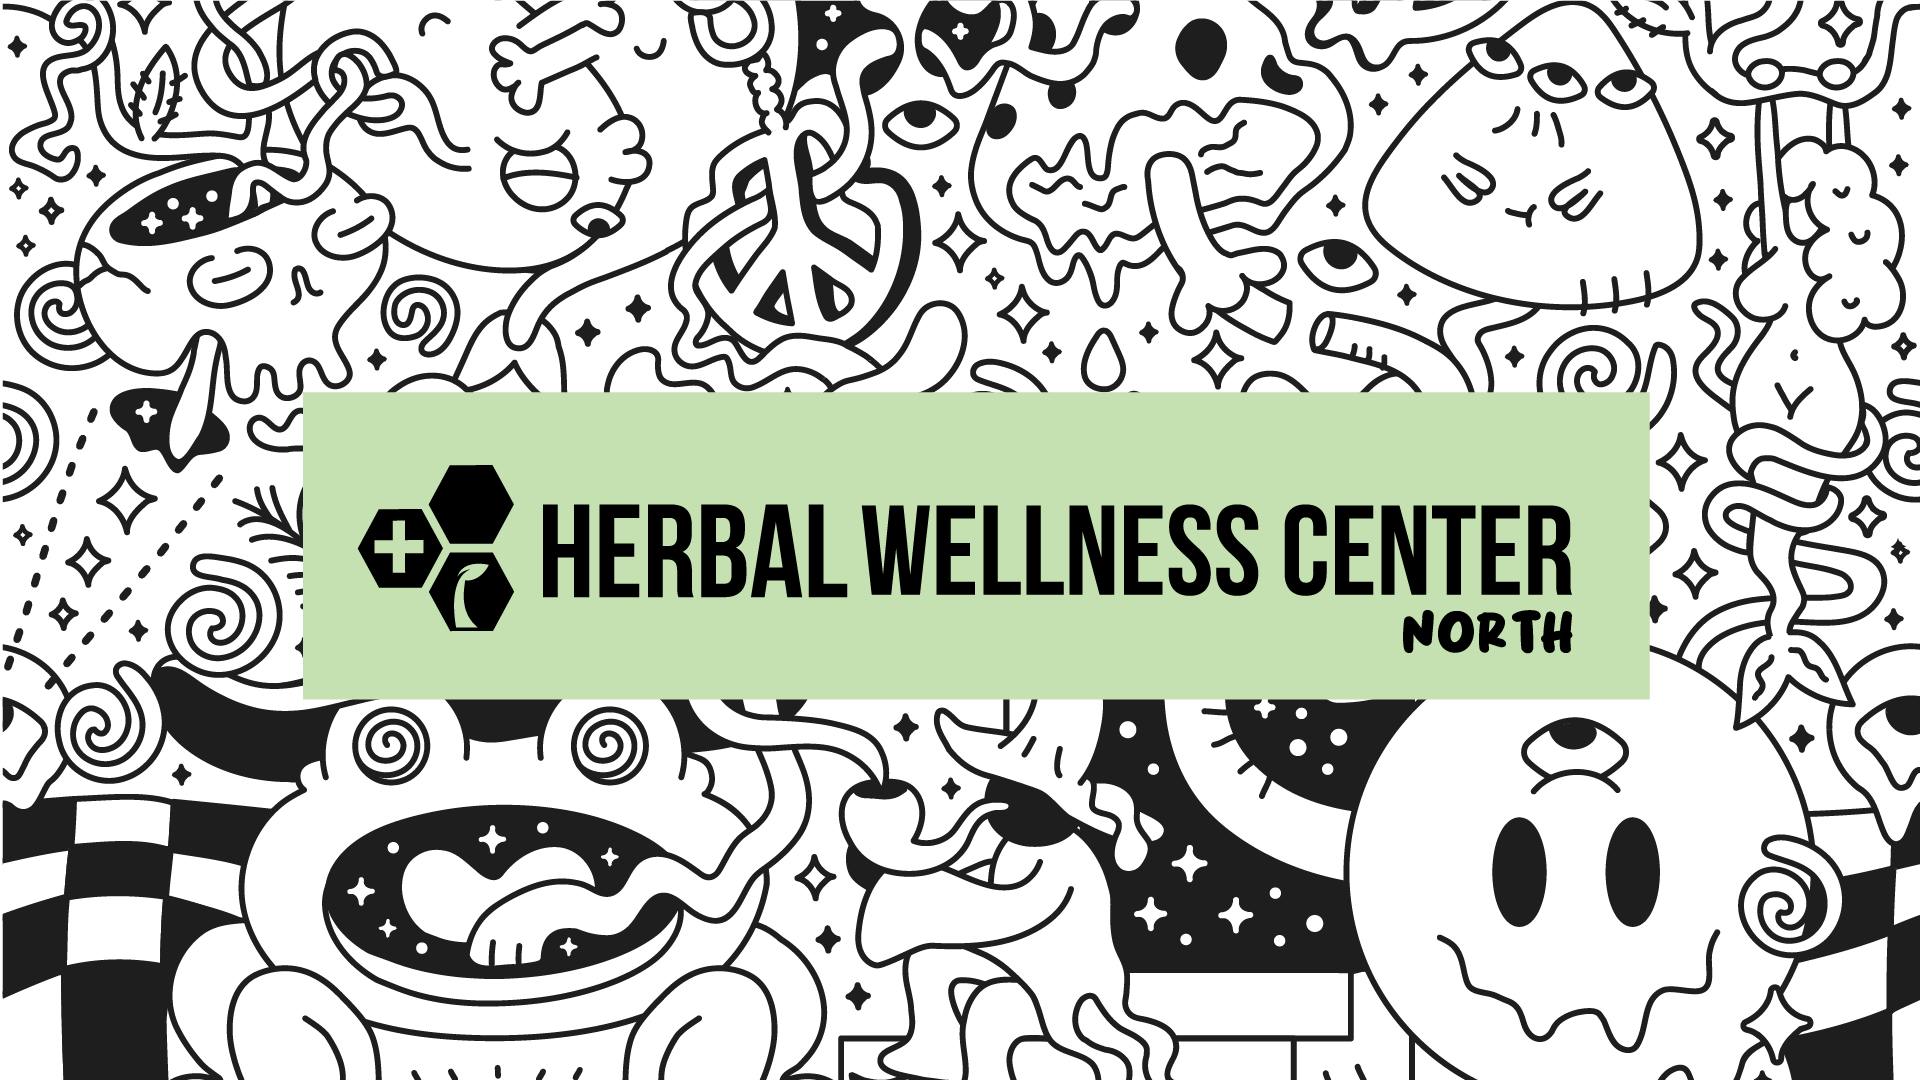 Herbal wellness center north